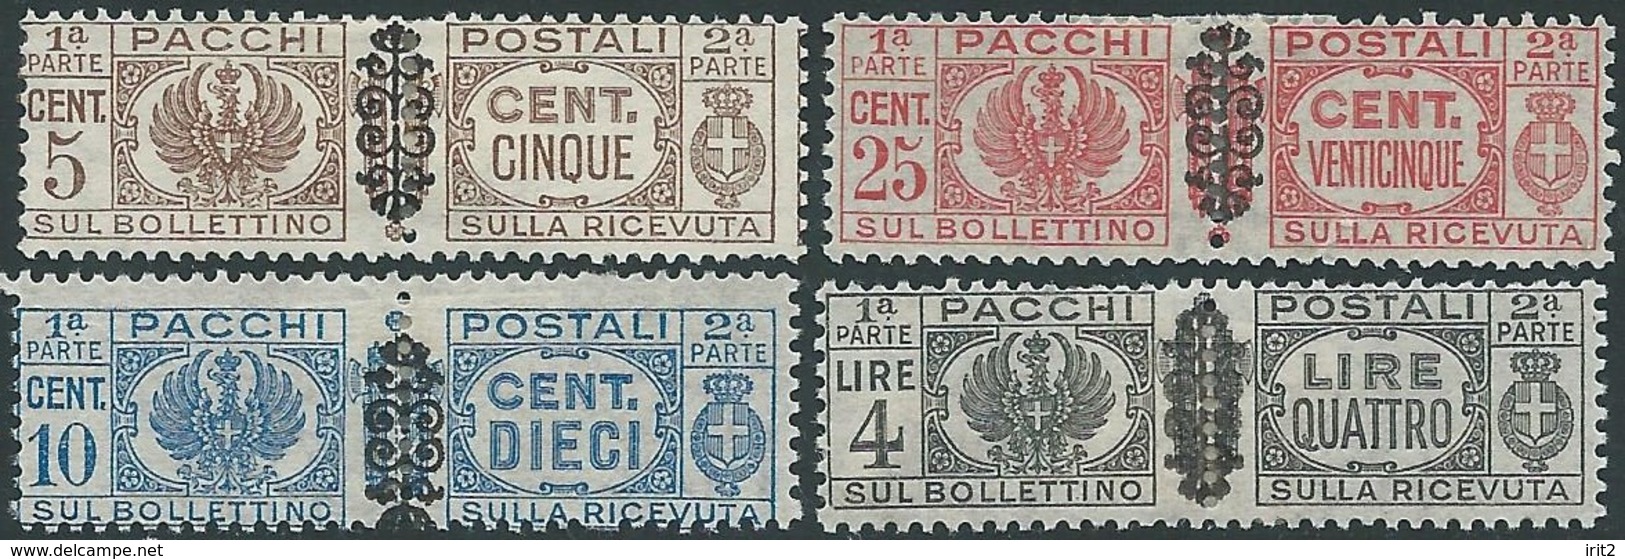 ITALY ITALIA ITALIEN ITALIE  REPUBBLICA 1945 PACCHI POSTALI - Postal Parcels